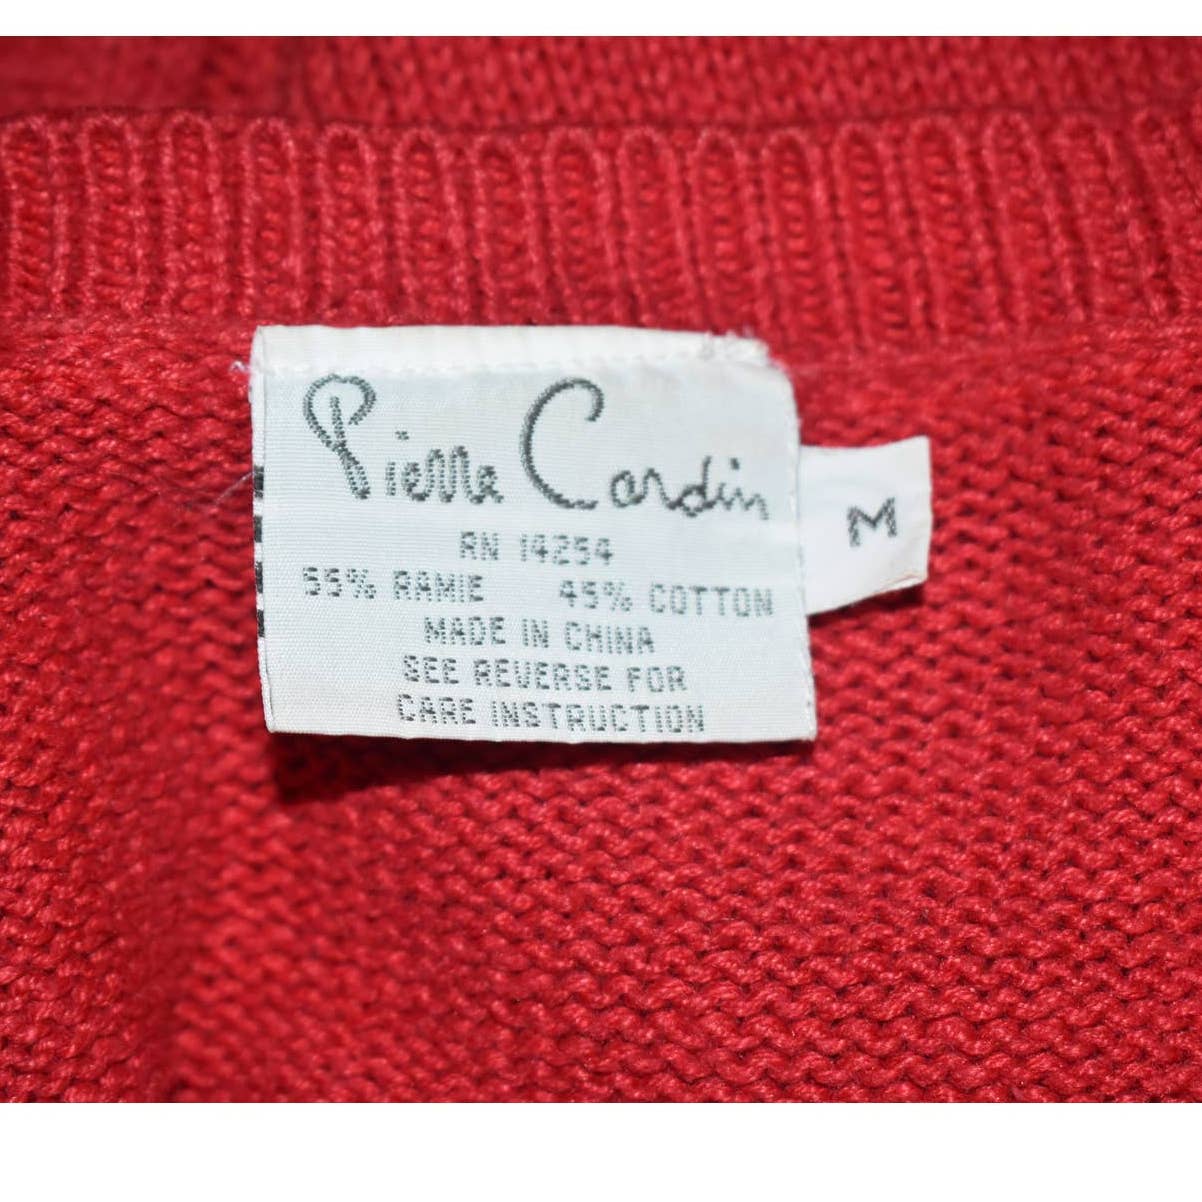 Vintage Pierre Cardin Red Knit Cardigan Sweater - M